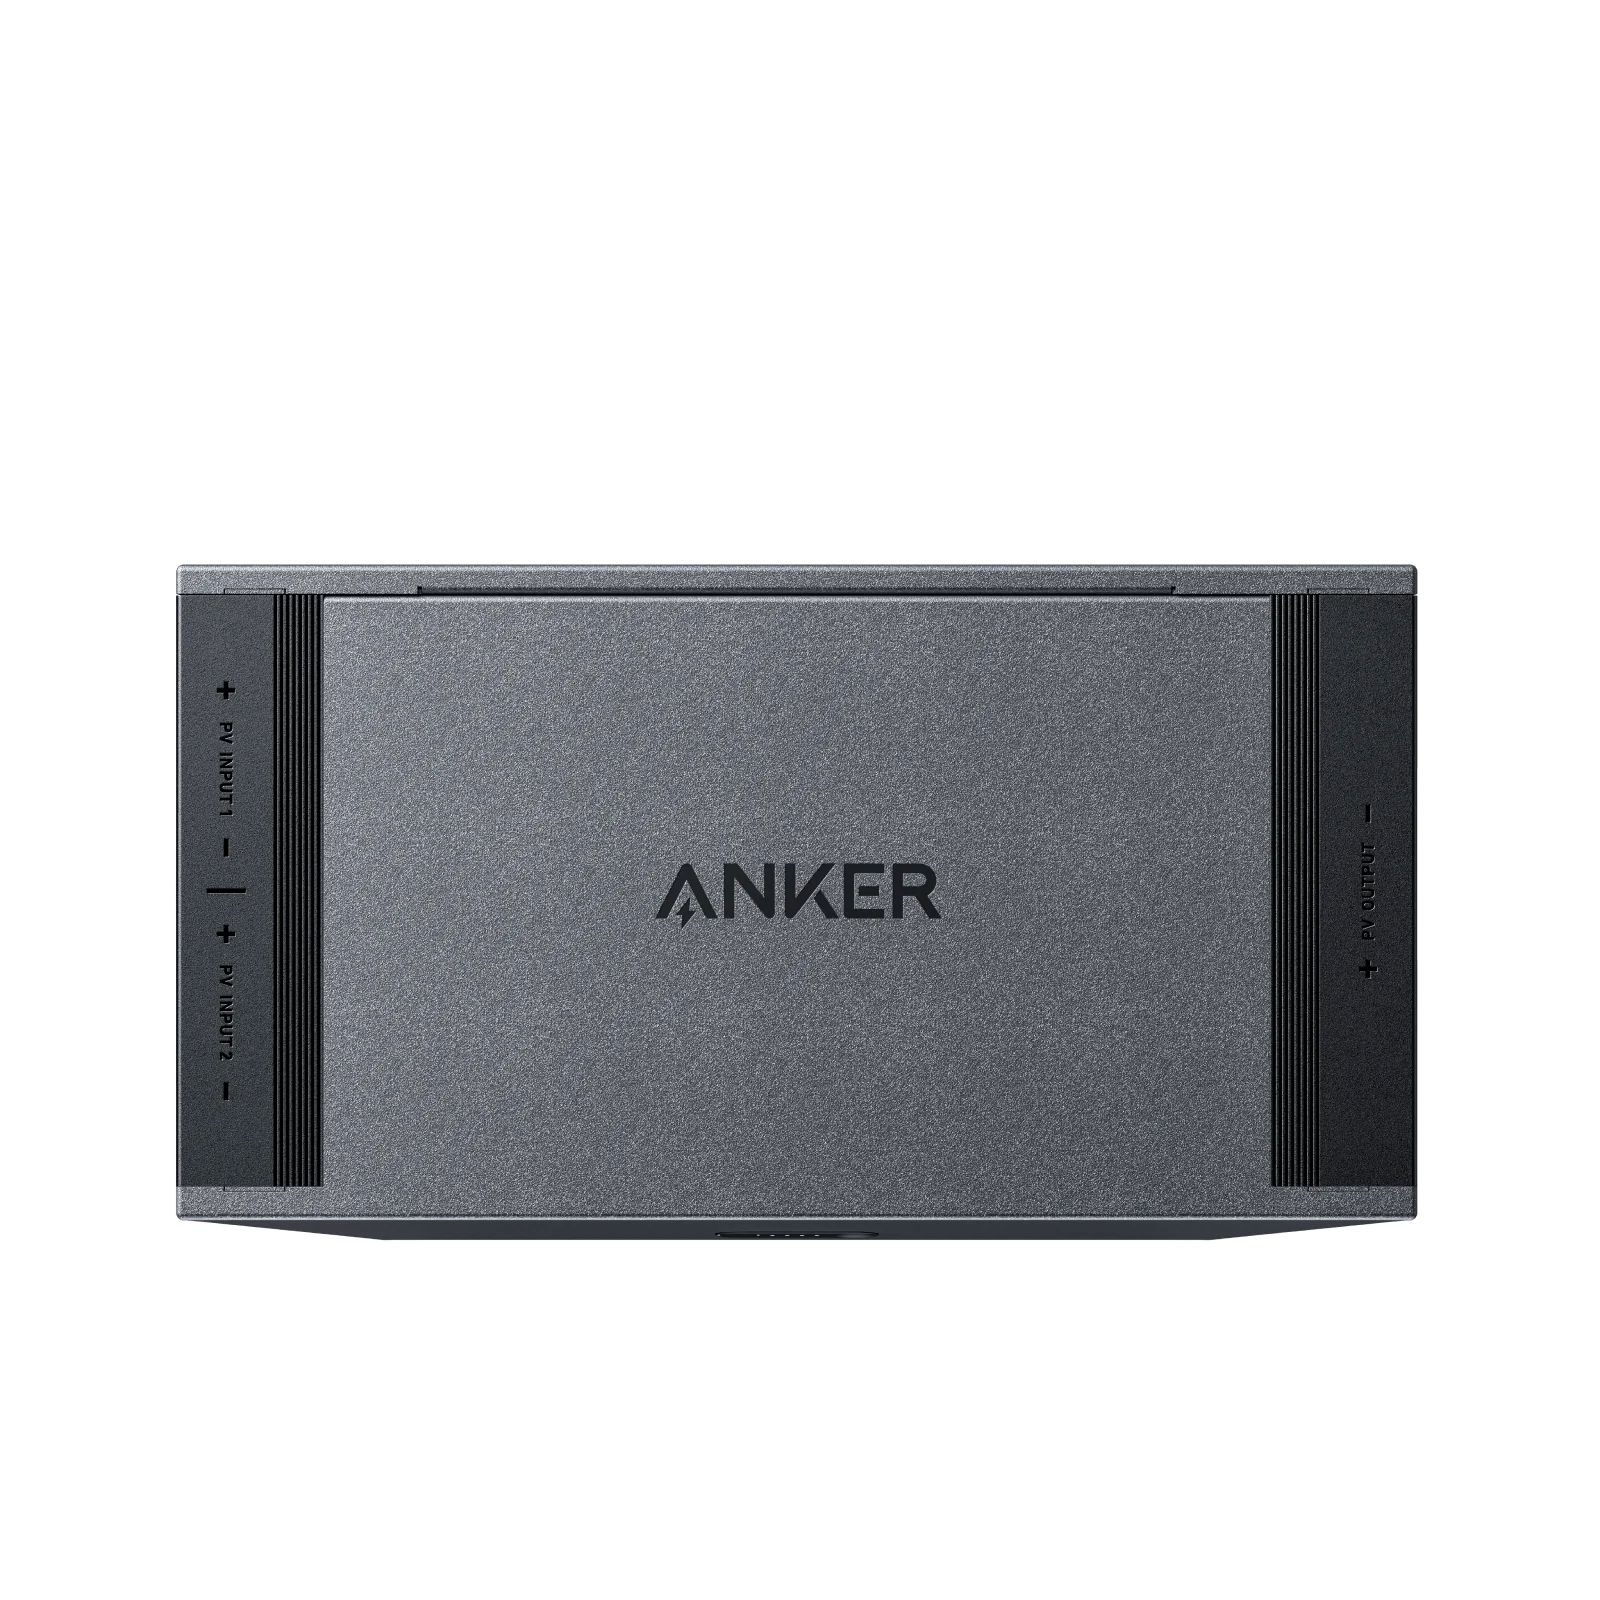 ANKER Solarbank SOLIX E1600 Wh Powerstation, schwarz LiFePO4 Speicher 1600